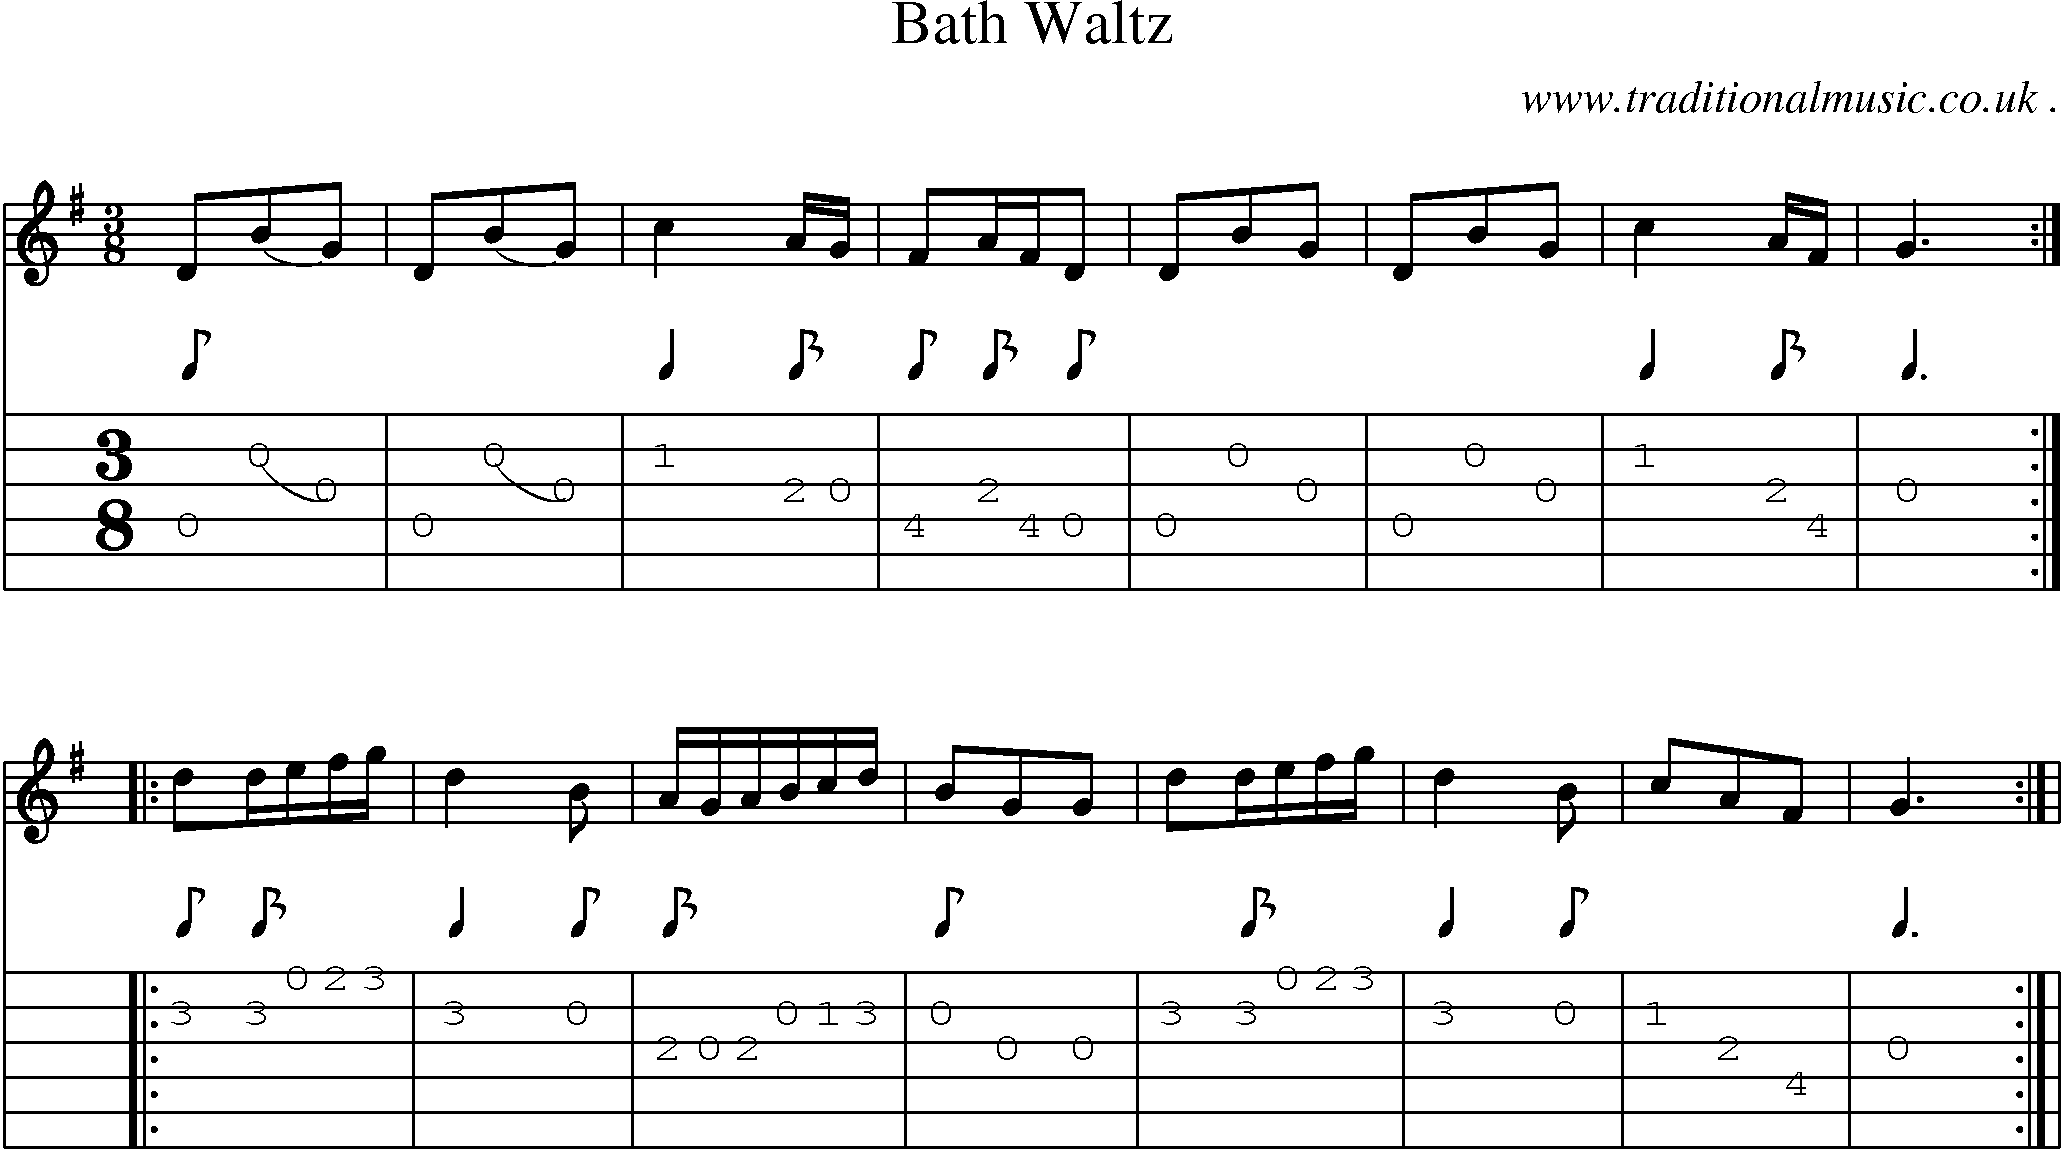 Sheet-Music and Guitar Tabs for Bath Waltz